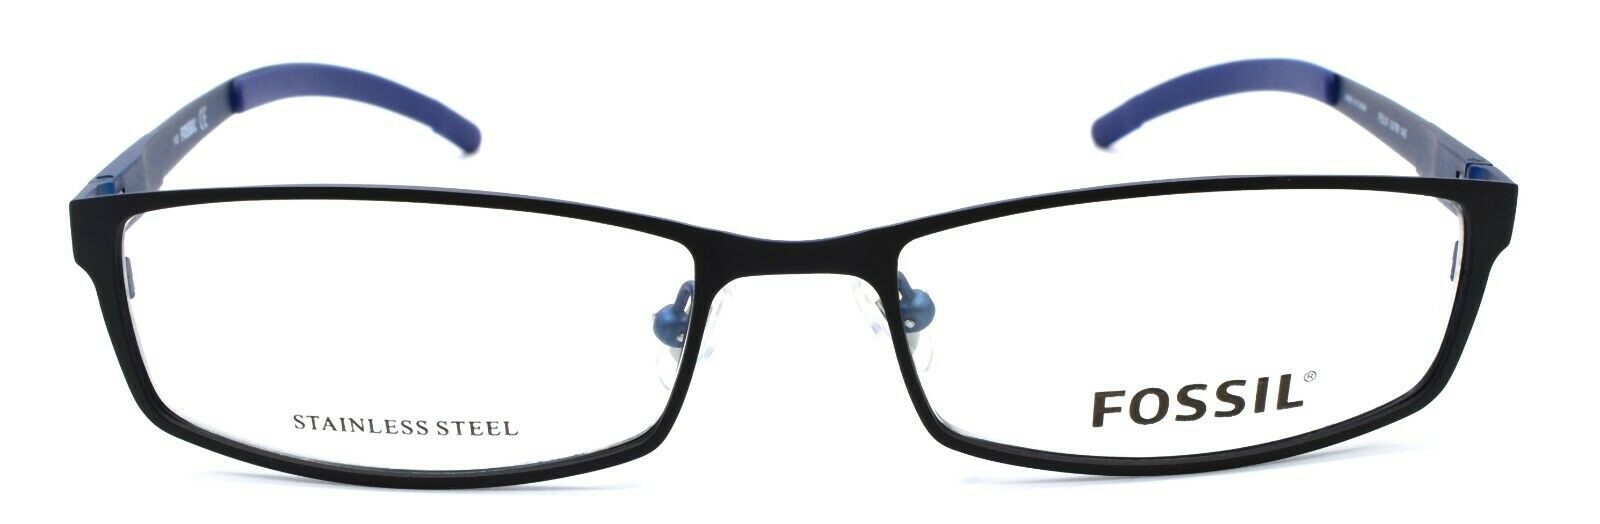 2-Fossil Felix 0JYM Men's Eyeglasses Frames 54-17-140 Black / Blue-716737134085-IKSpecs